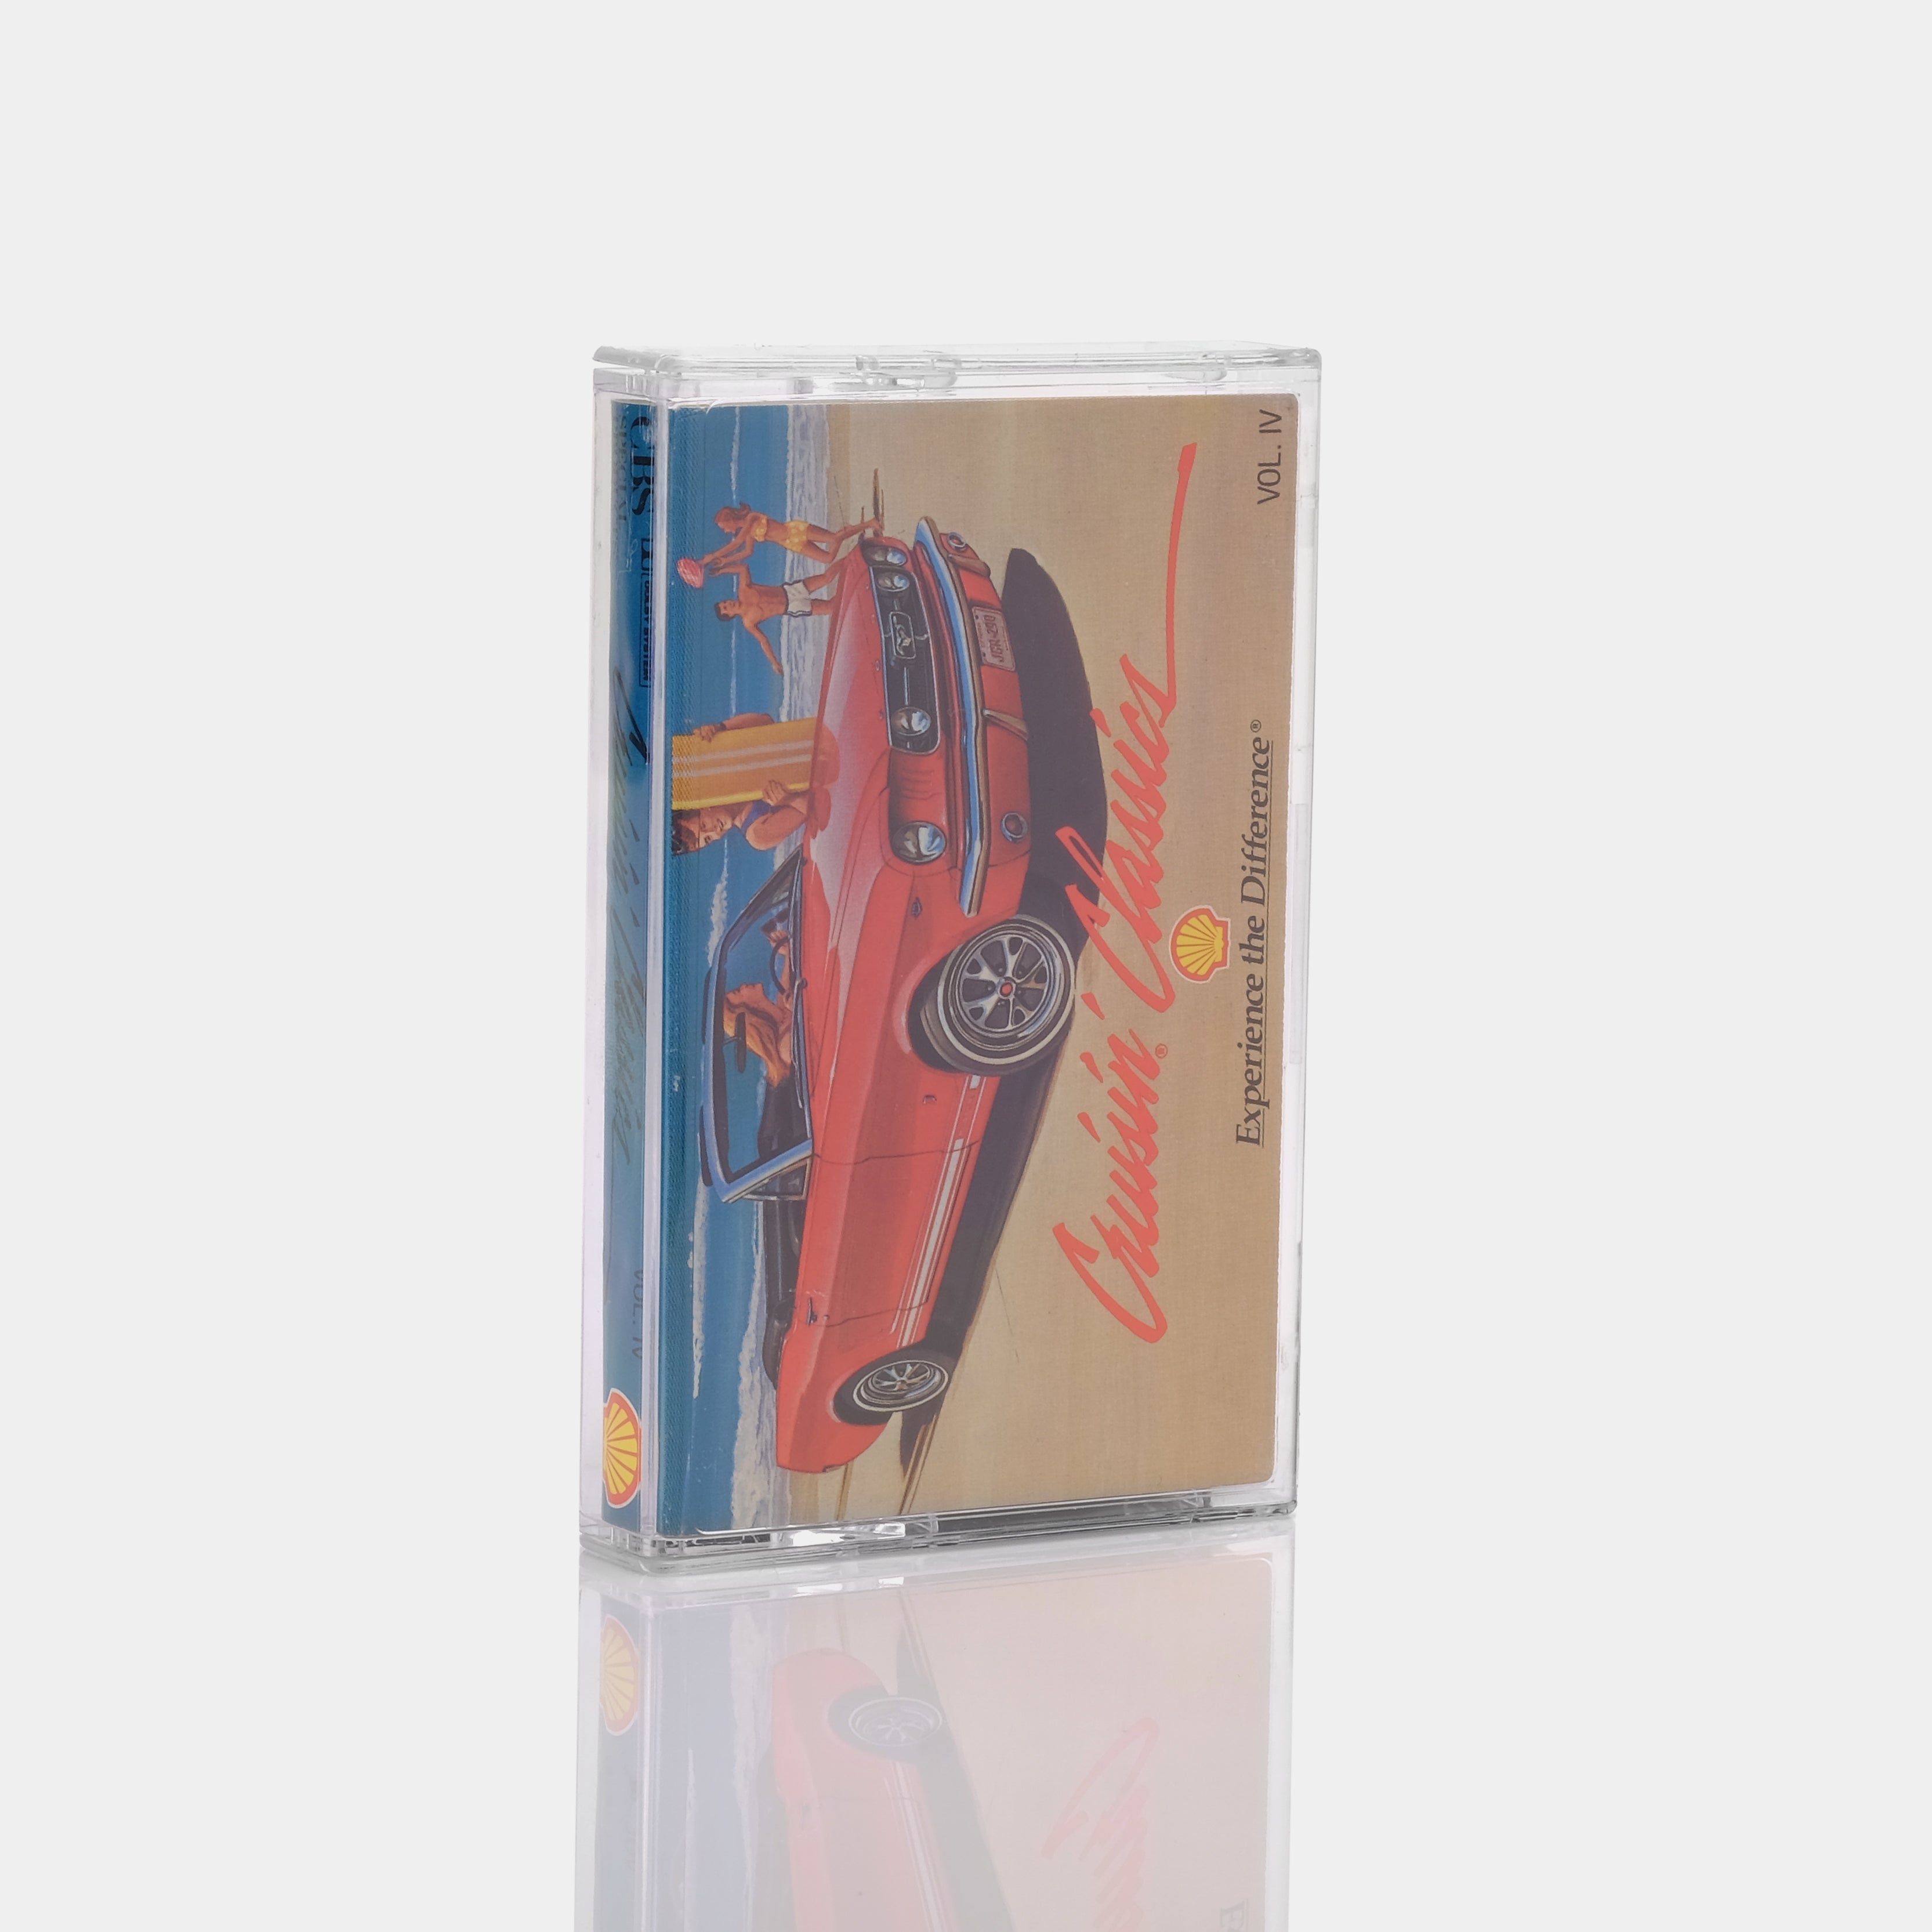 Cruisin' Classics Vol. IV  Cassette Tape